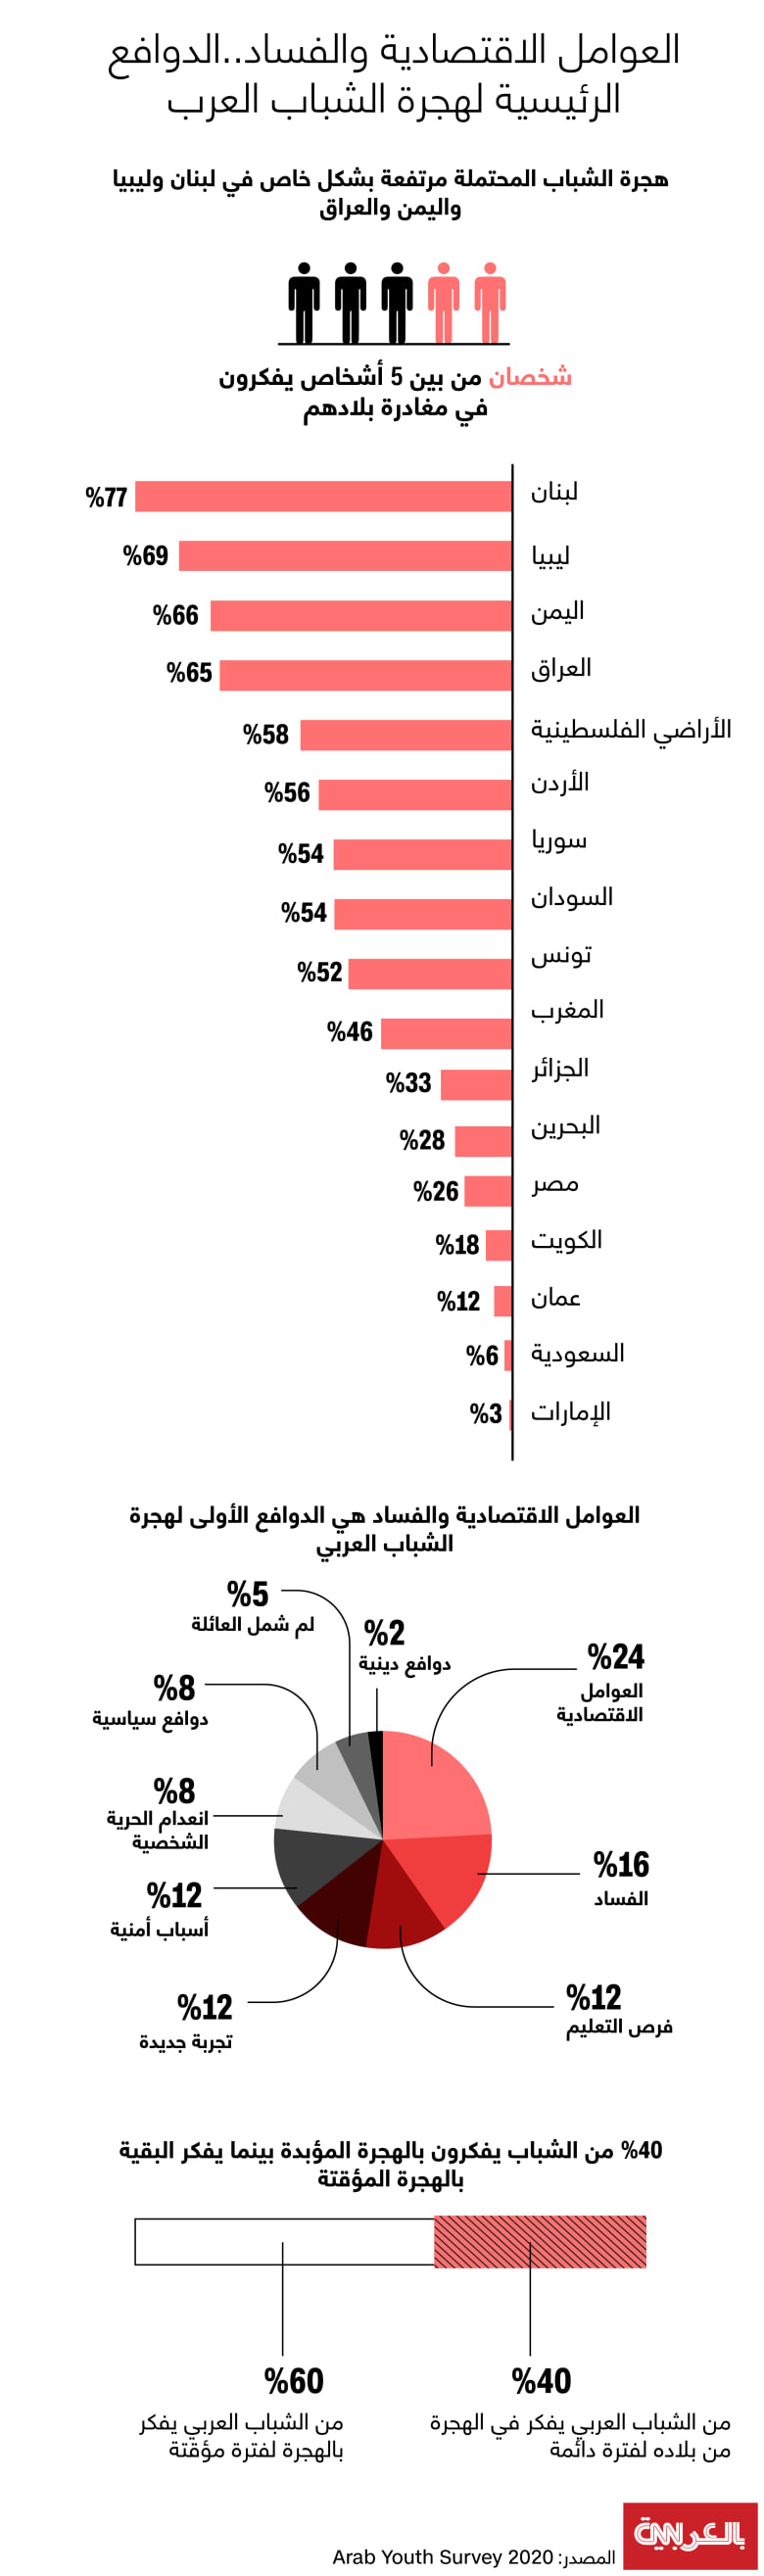 Arab-youth-survey-migration